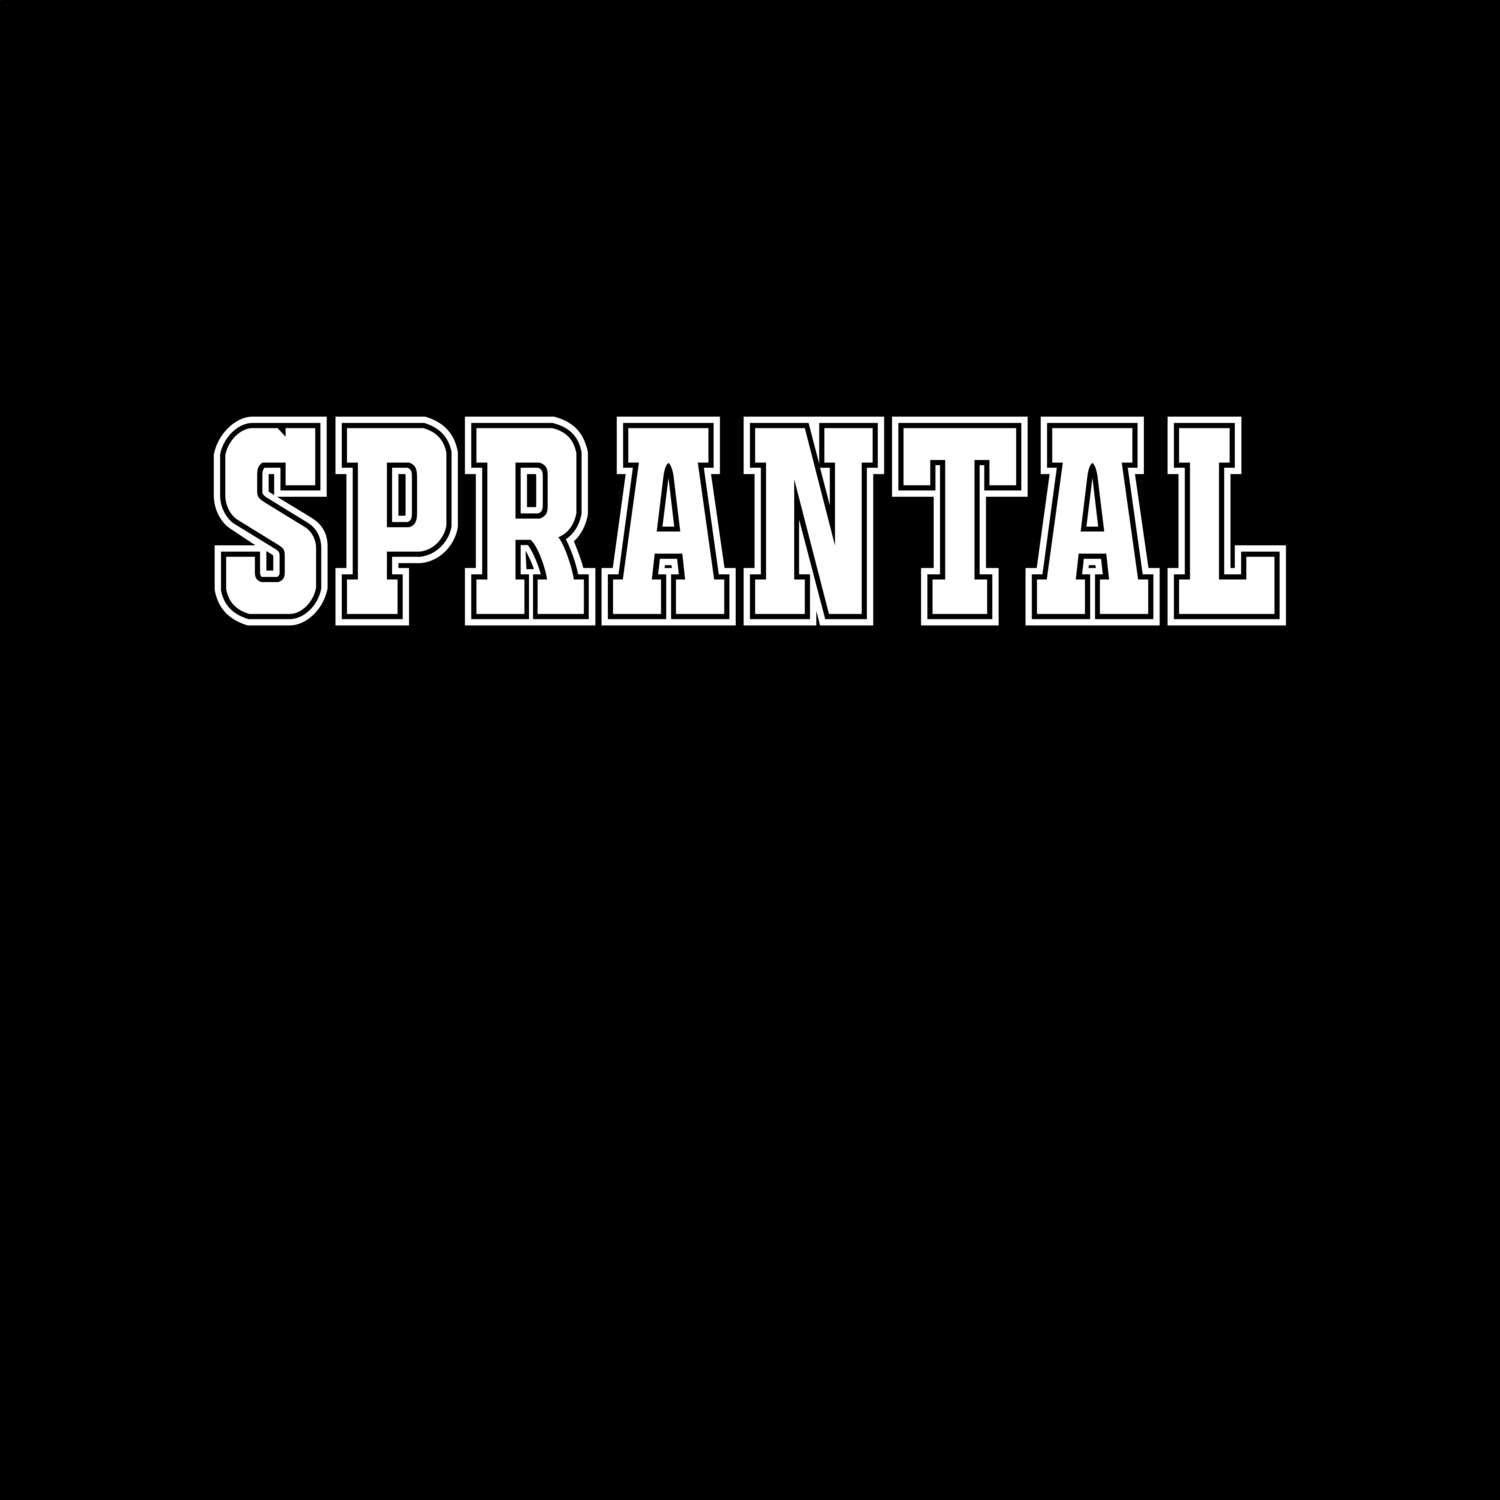 Sprantal T-Shirt »Classic«